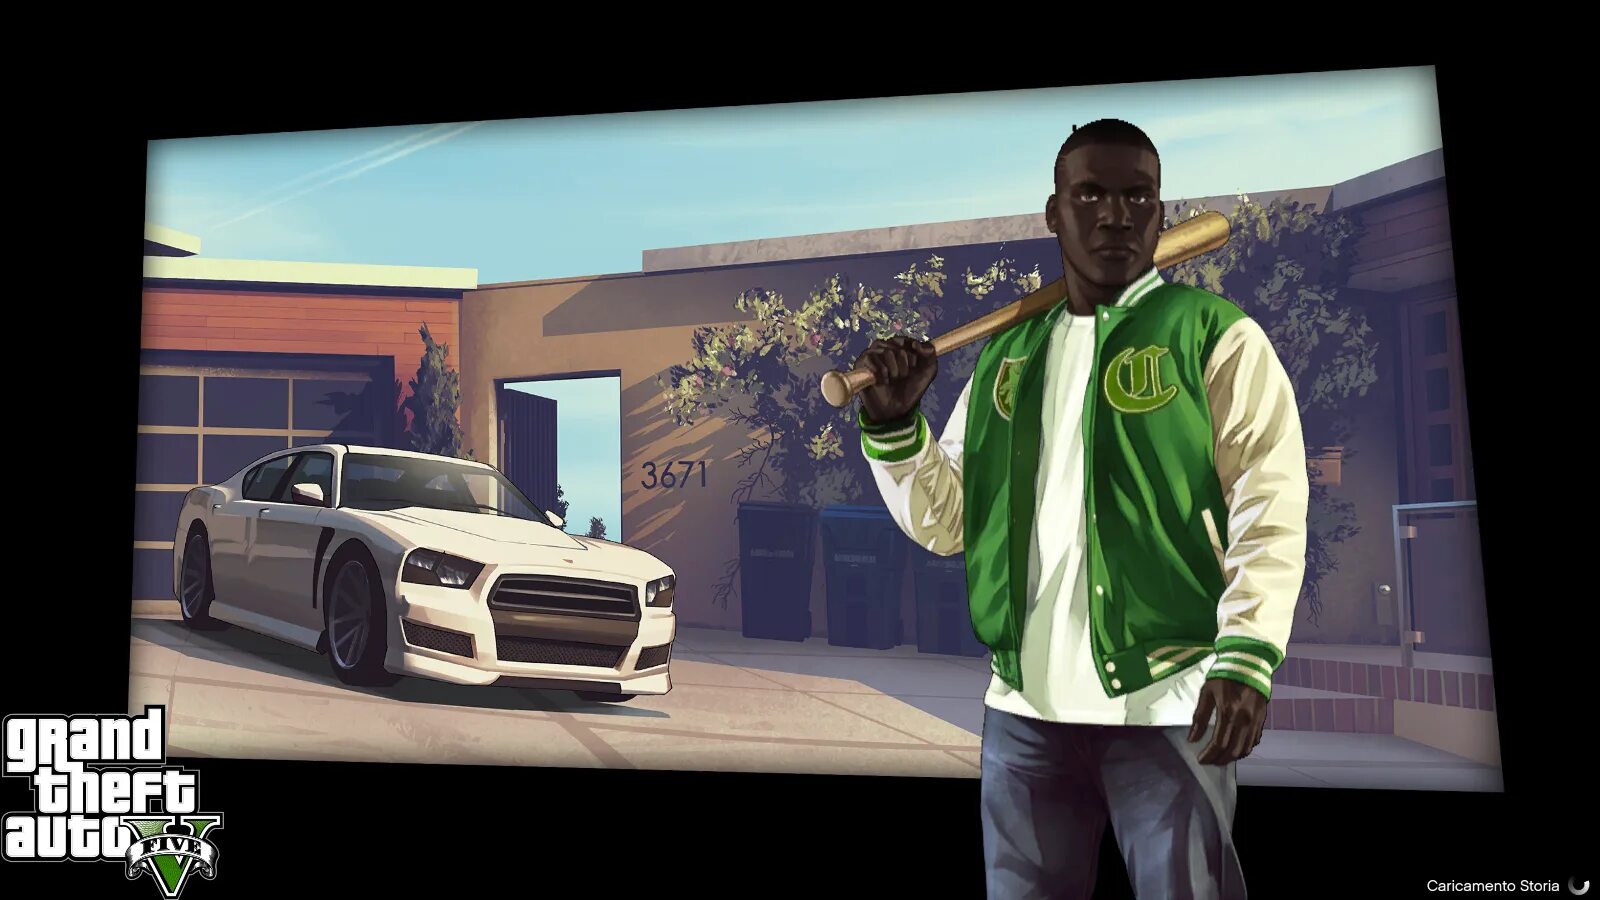 Social game gta 5. Grand Theft auto 5 загрузочные экраны. Экран загрузки ГТА 5. Загрузочный экран ГТА 5. Загрузка ГТА 5.